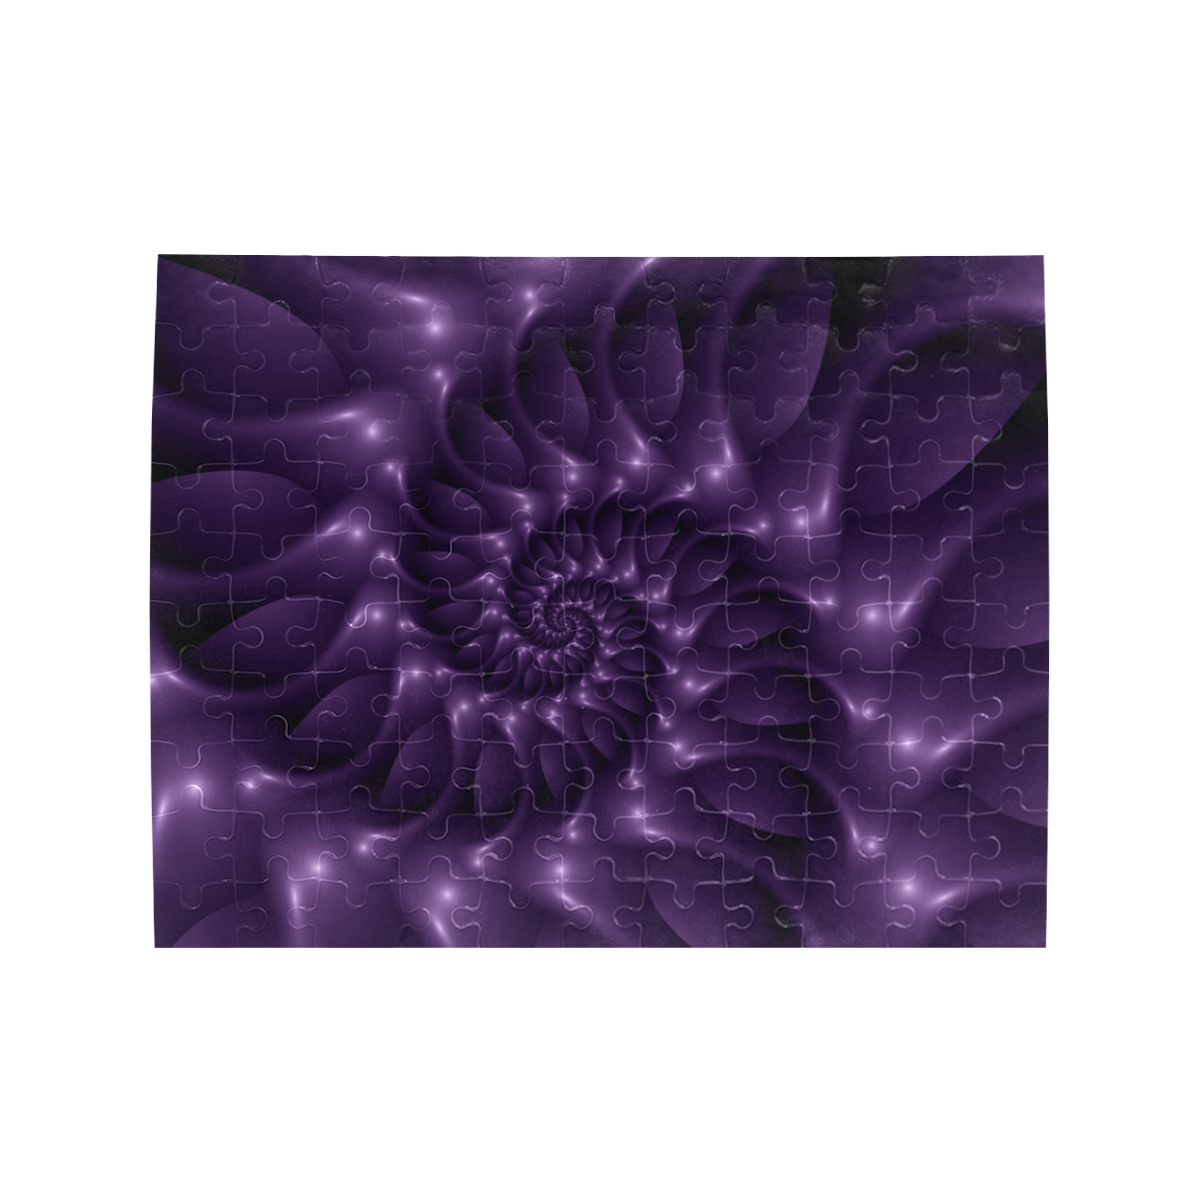 Purple Spiral Fractal Puzzle Rectangle Jigsaw Puzzle (Set of 110 Pieces)